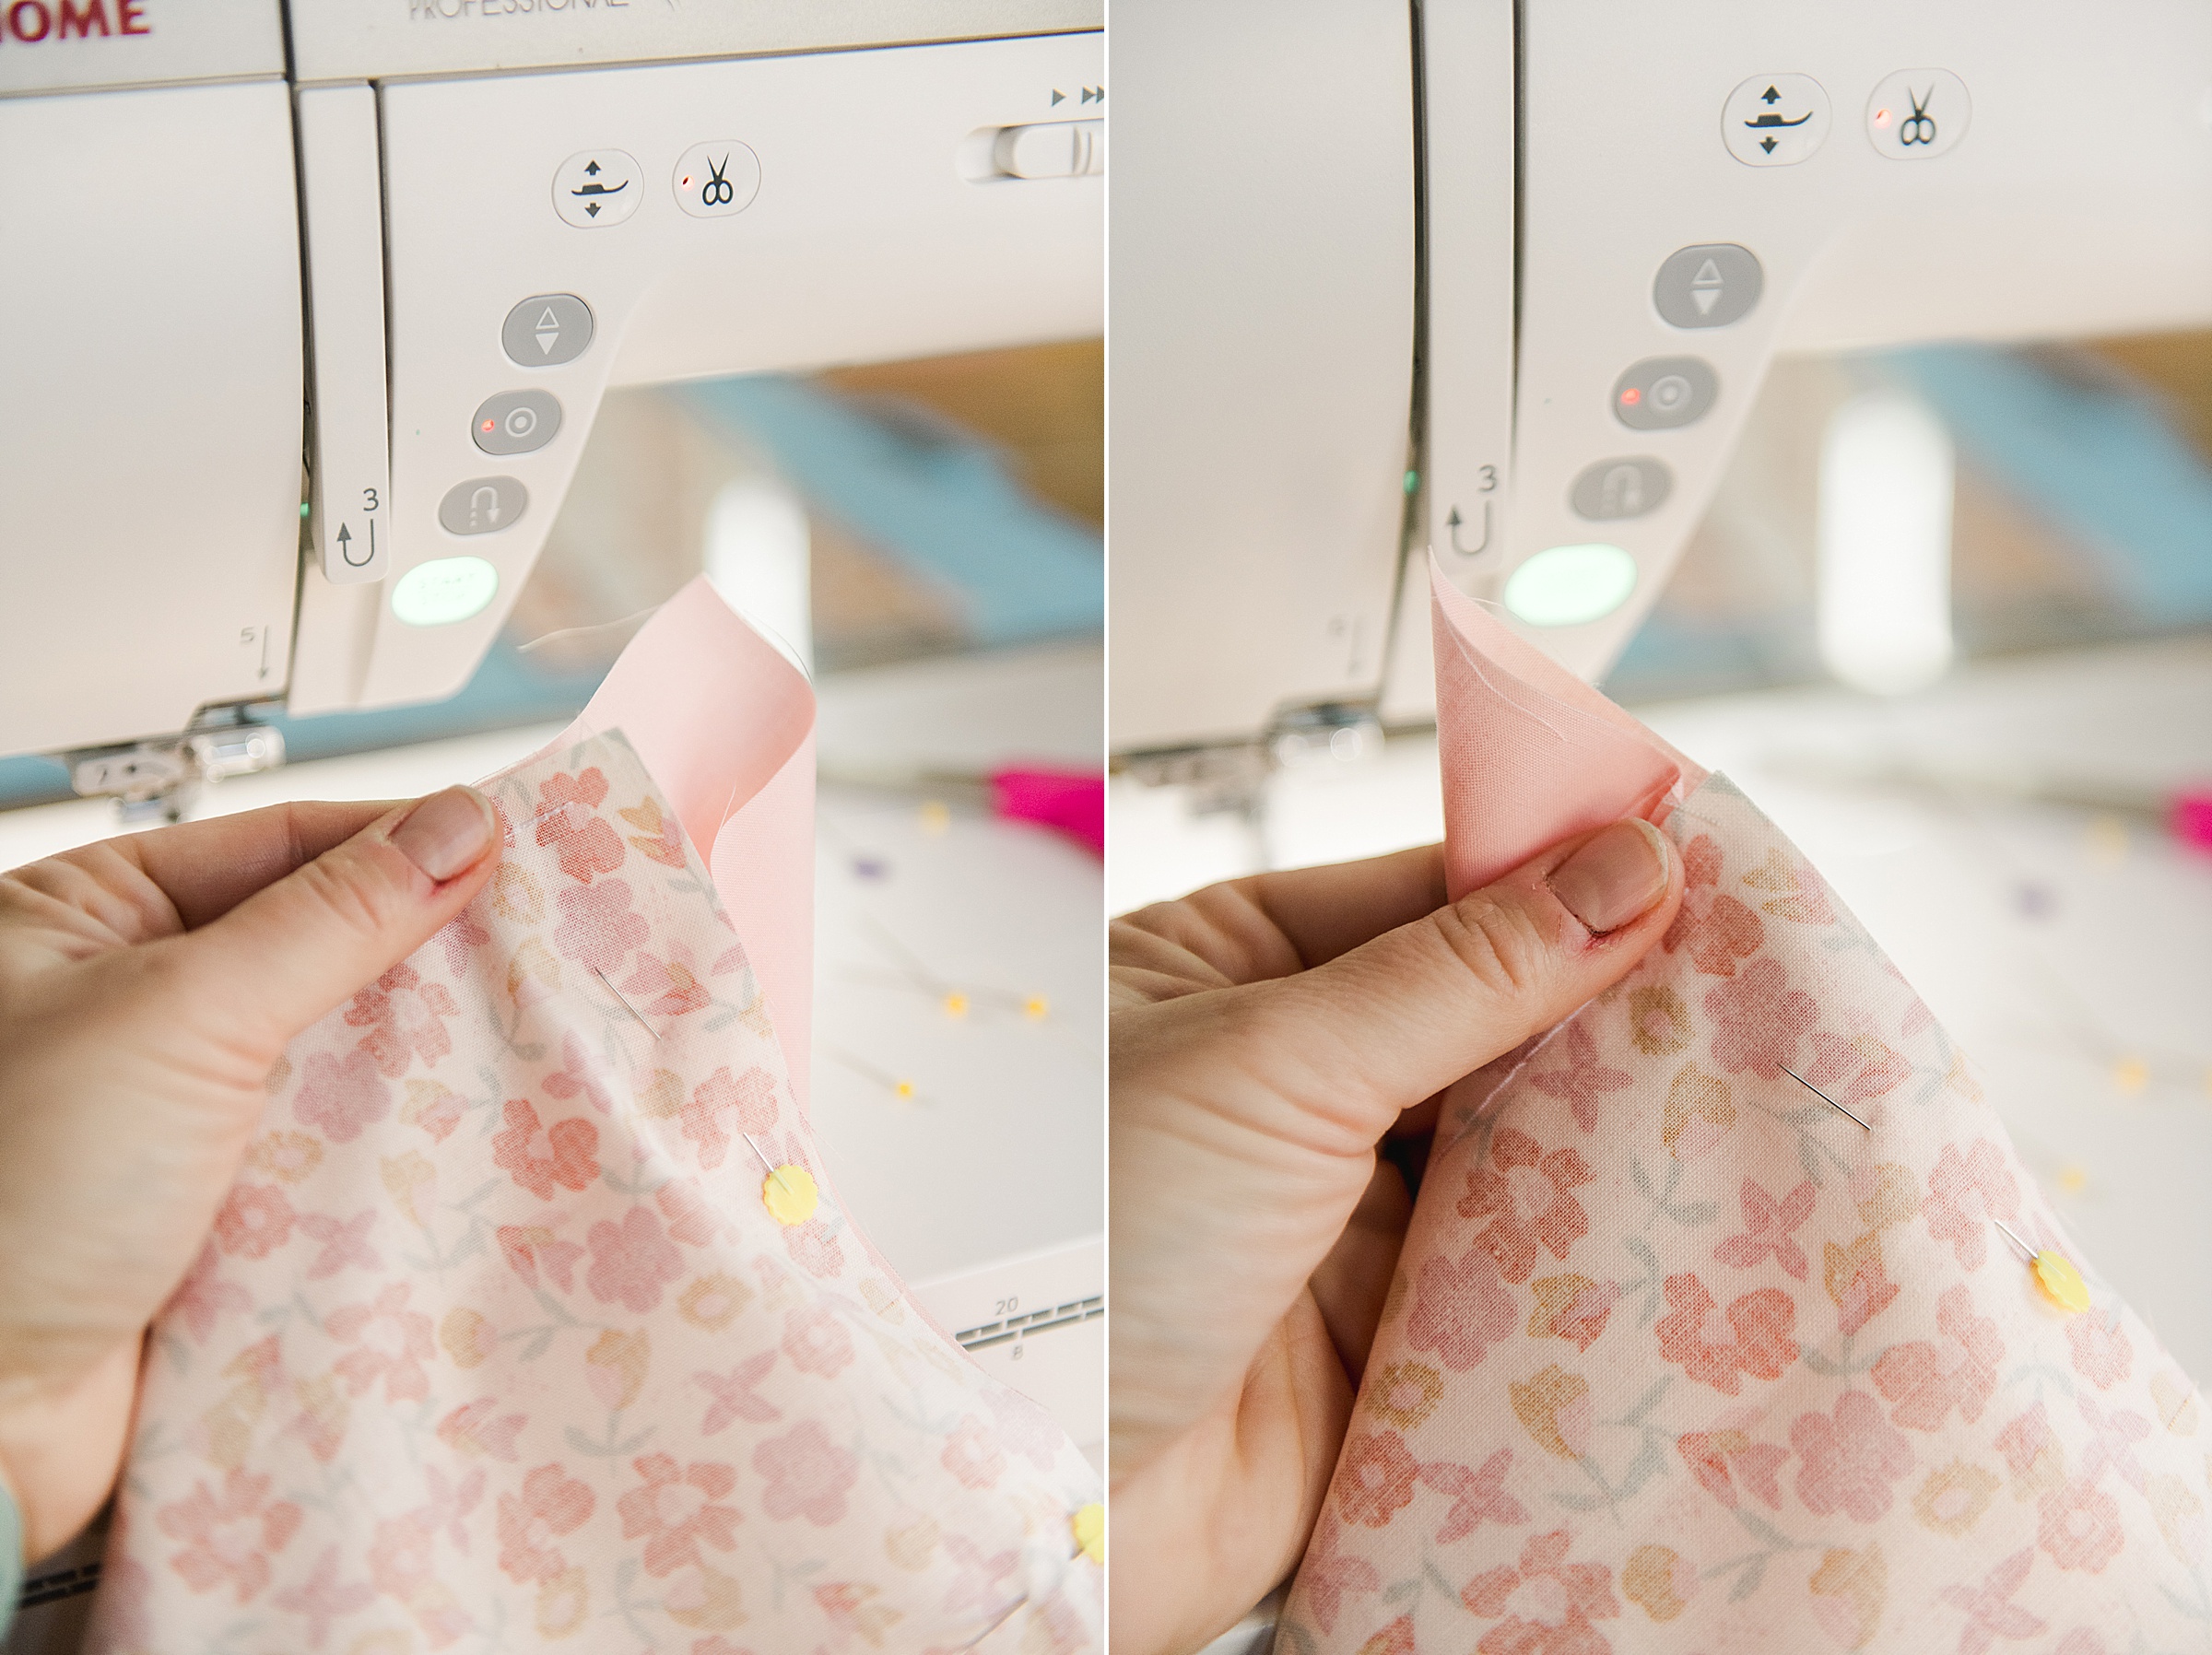 Easy binding napkin tutorial, fabric napkin tutorial, free fabric napkin pattern, how to bind easily fabric napkin pattern, easy binding napkins